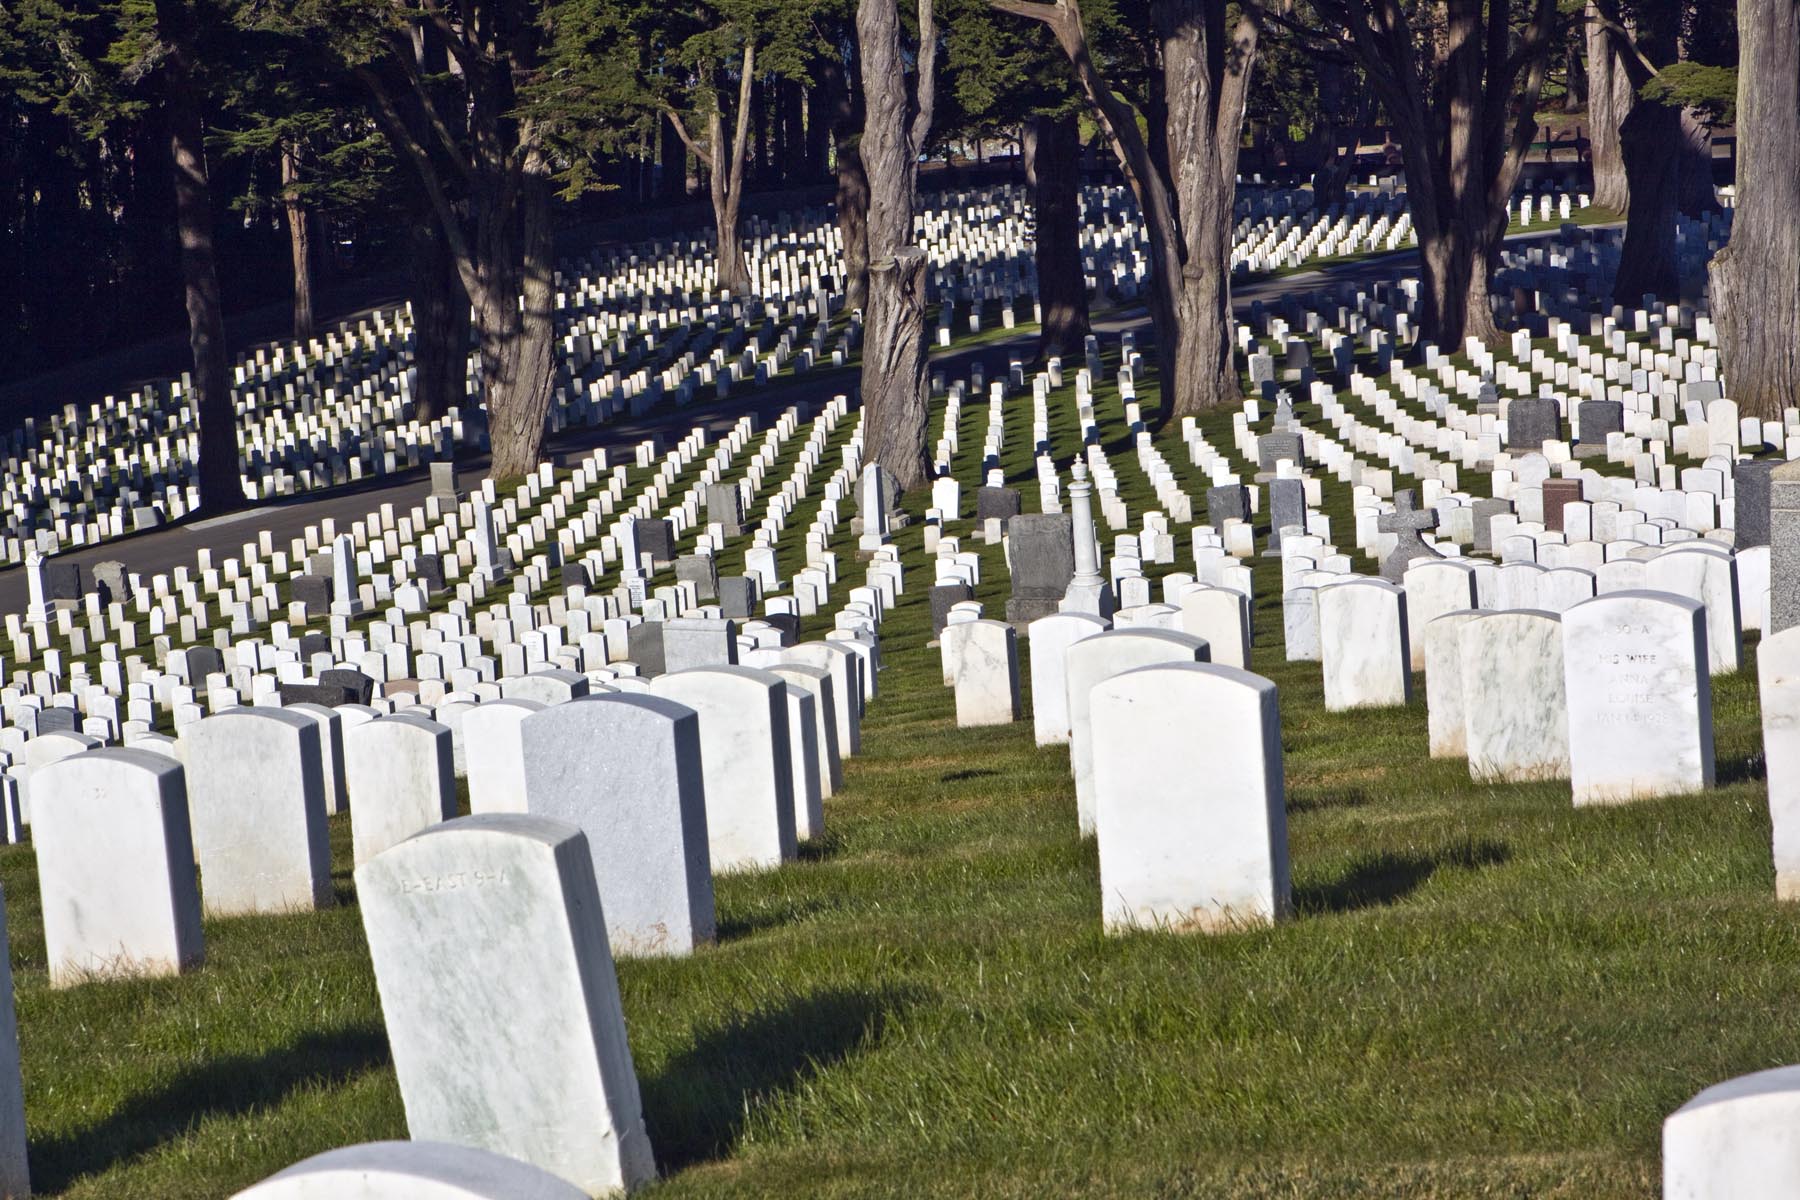 File:Military Graveyard MG 4866.jpg - Wikimedia Commons